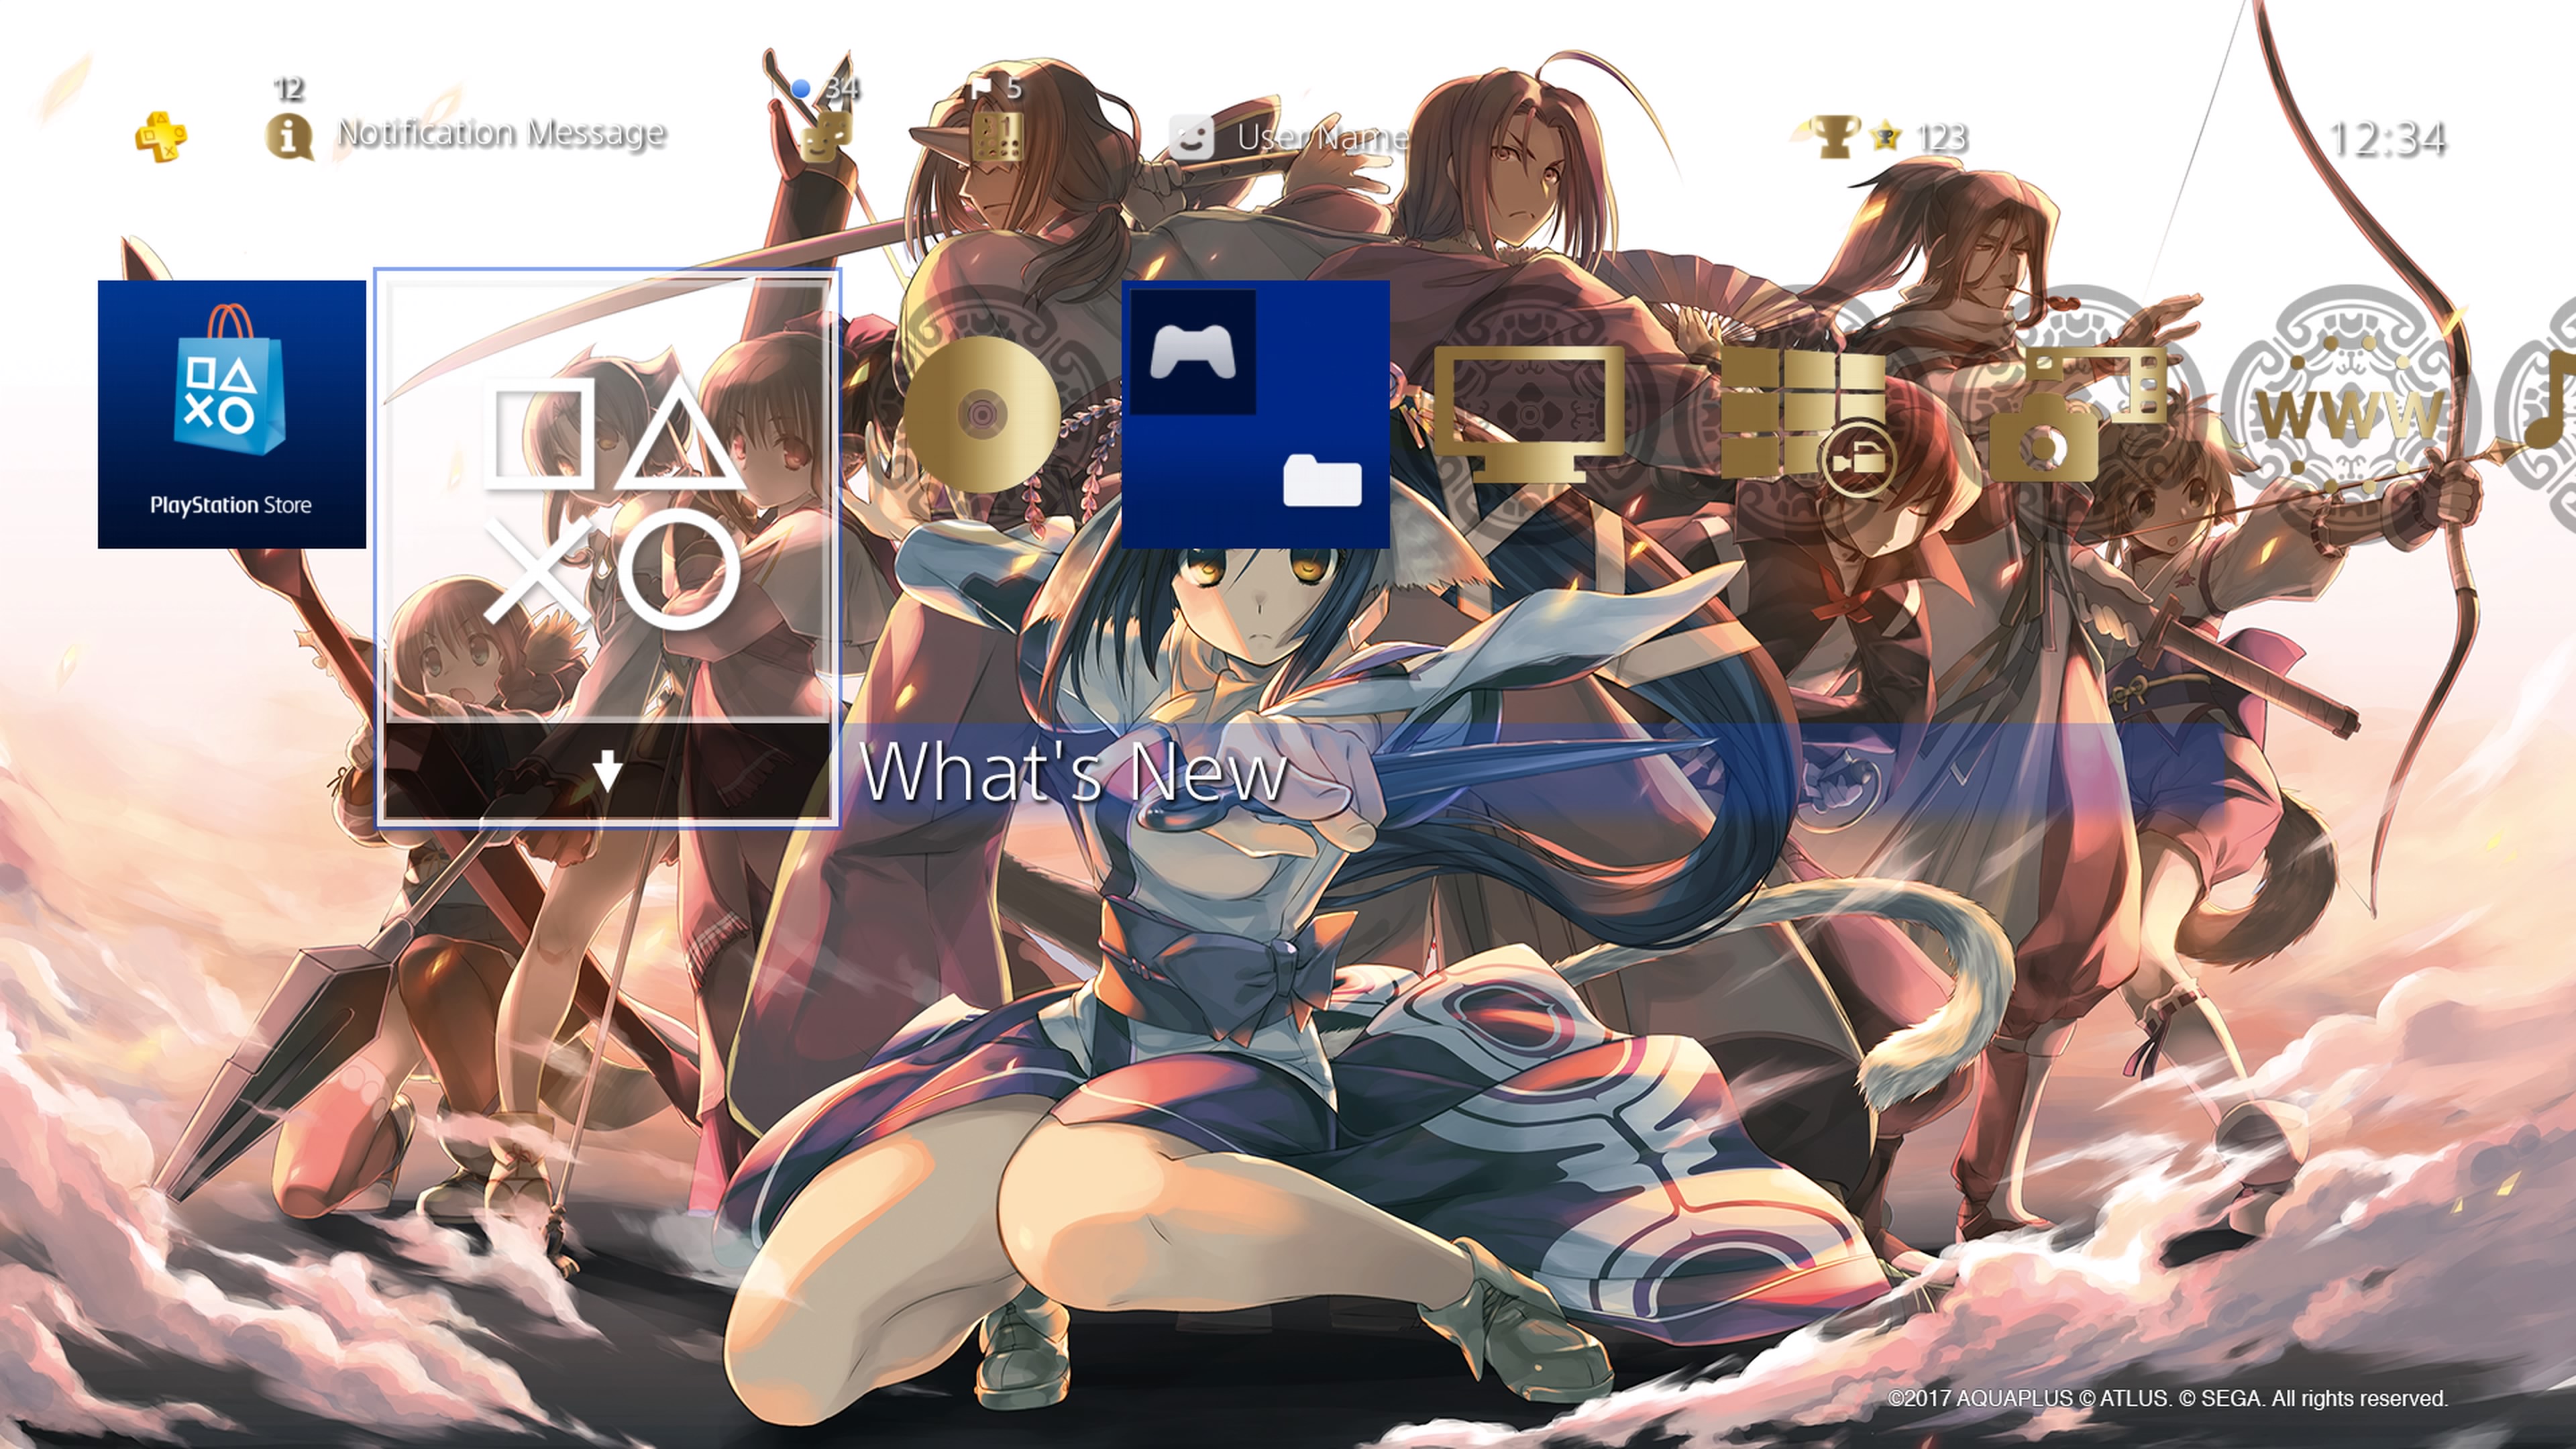 Utawarerumono: Mask of Deception PS4 and PS Vita themes now available -  Gematsu